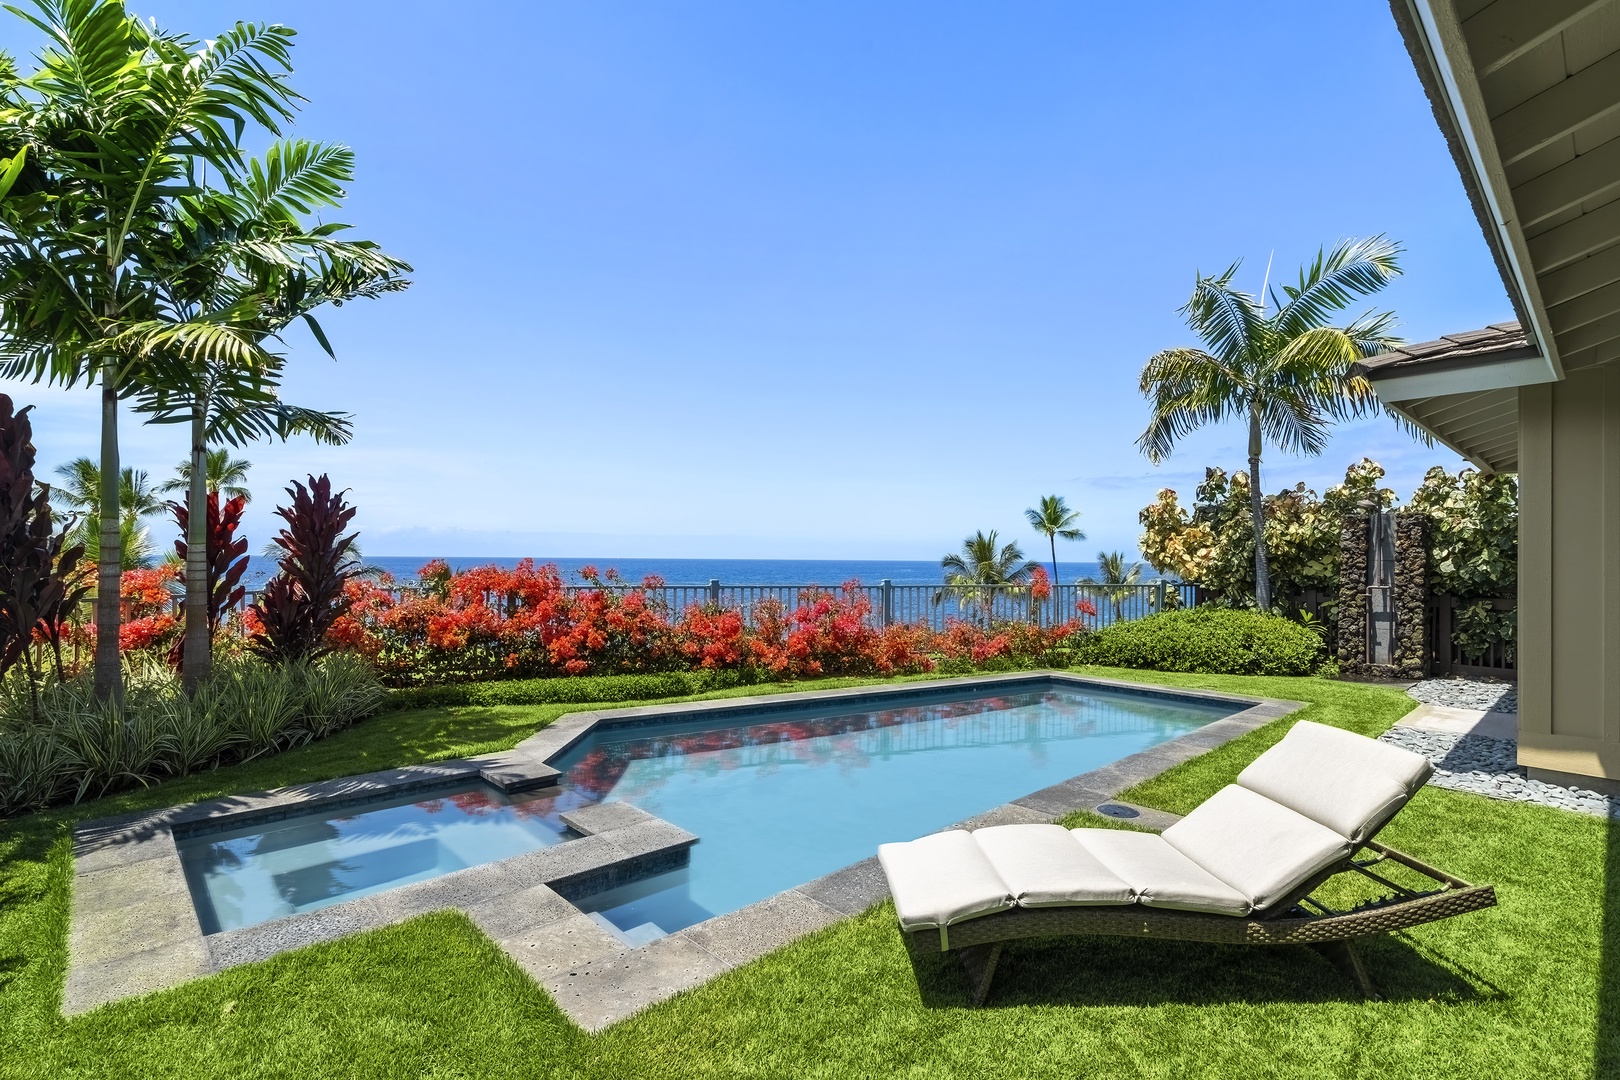 Kailua Kona Vacation Rentals, Blue Orca - Private saltwater pool & spa!